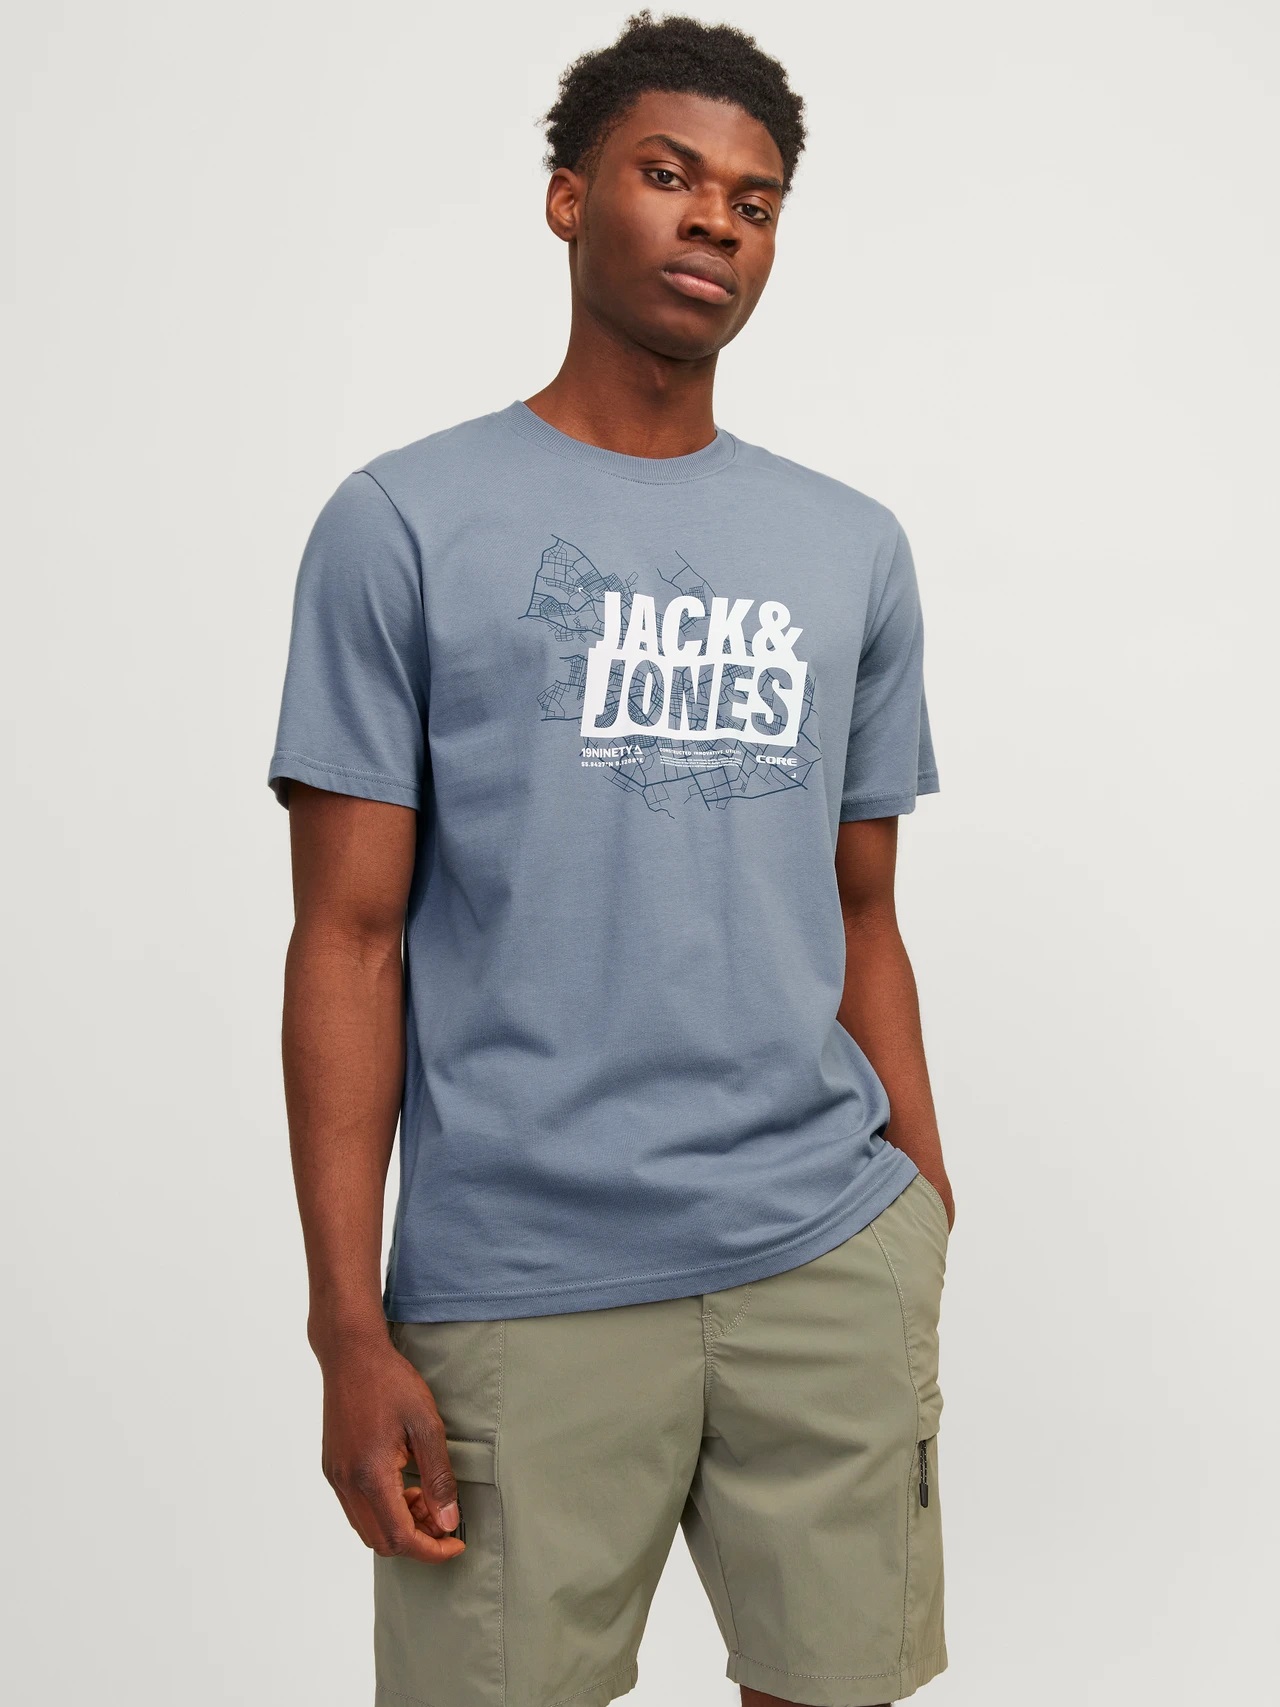 

мужские серые футболки Jack & jones 12257908, Серый